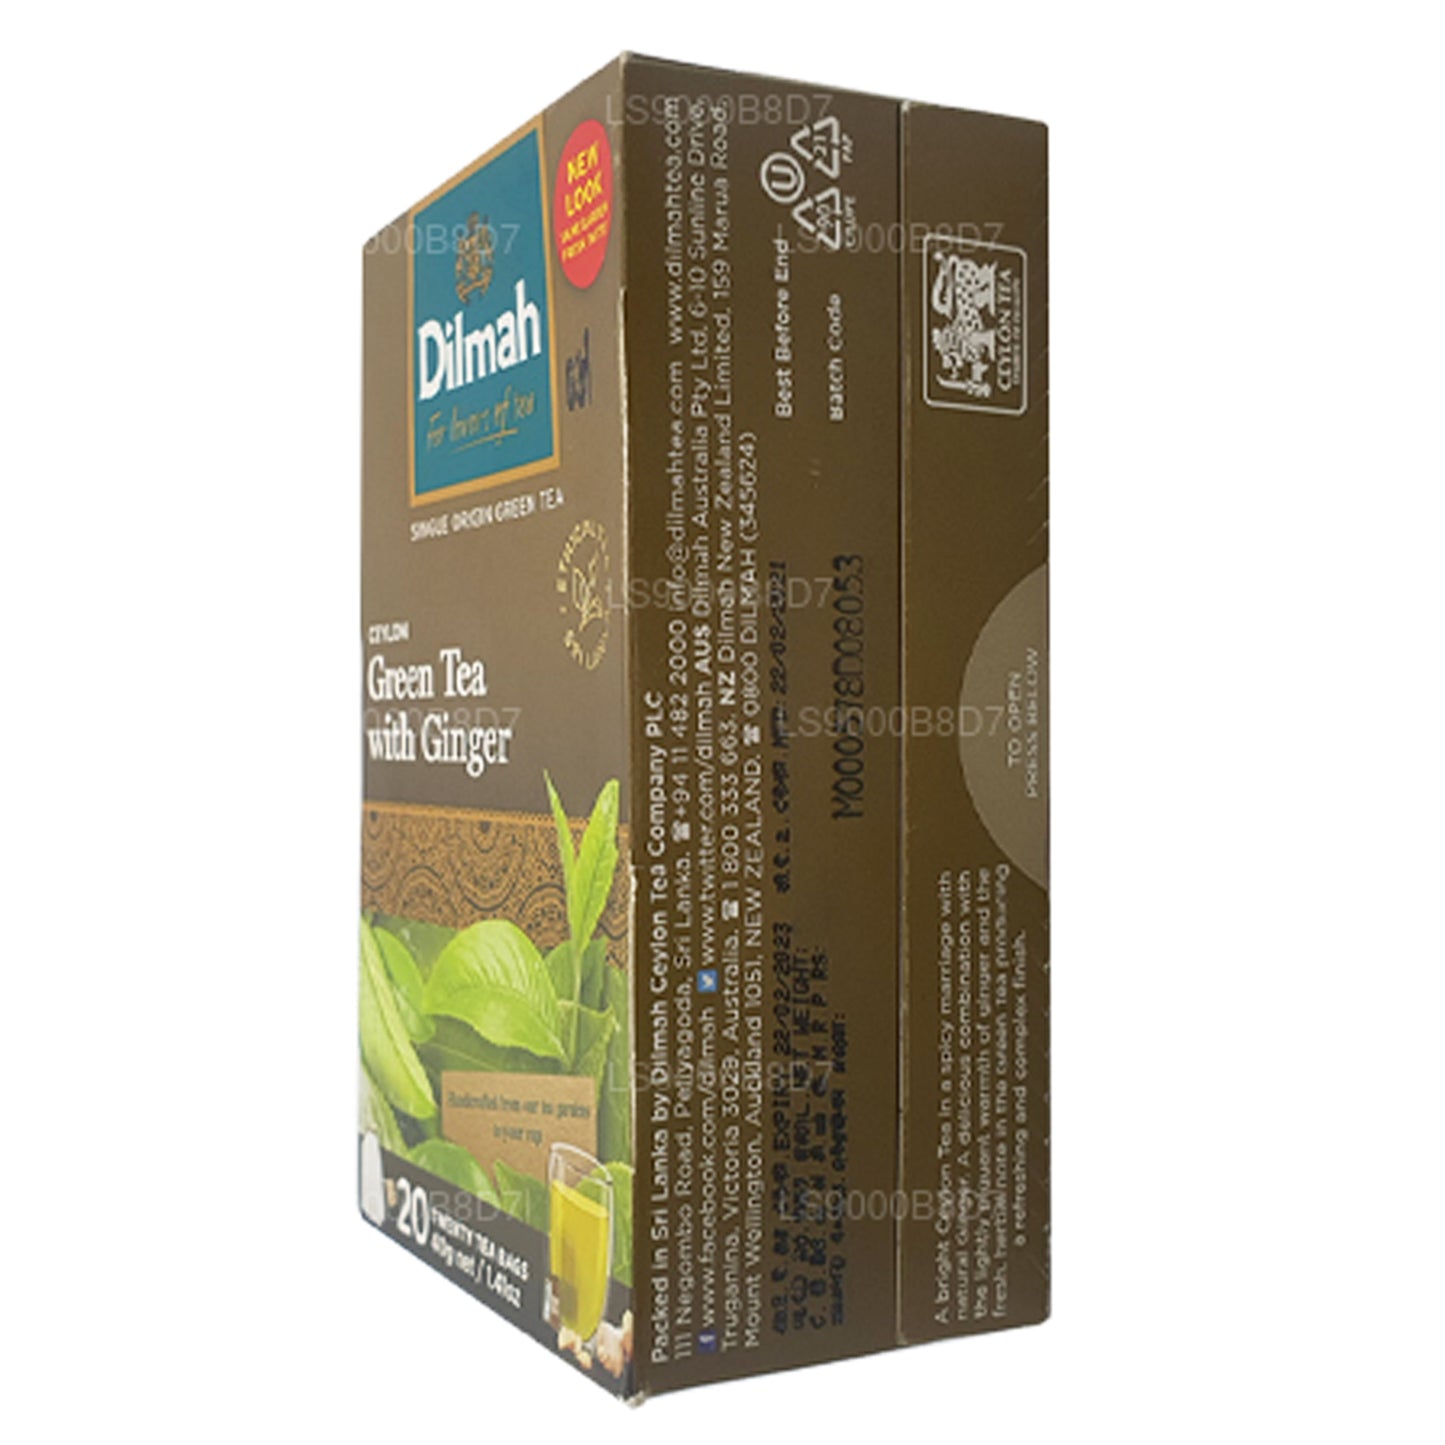 Dilmah Grüner Tee mit Ingwer (40 g), 20 Teebeutel